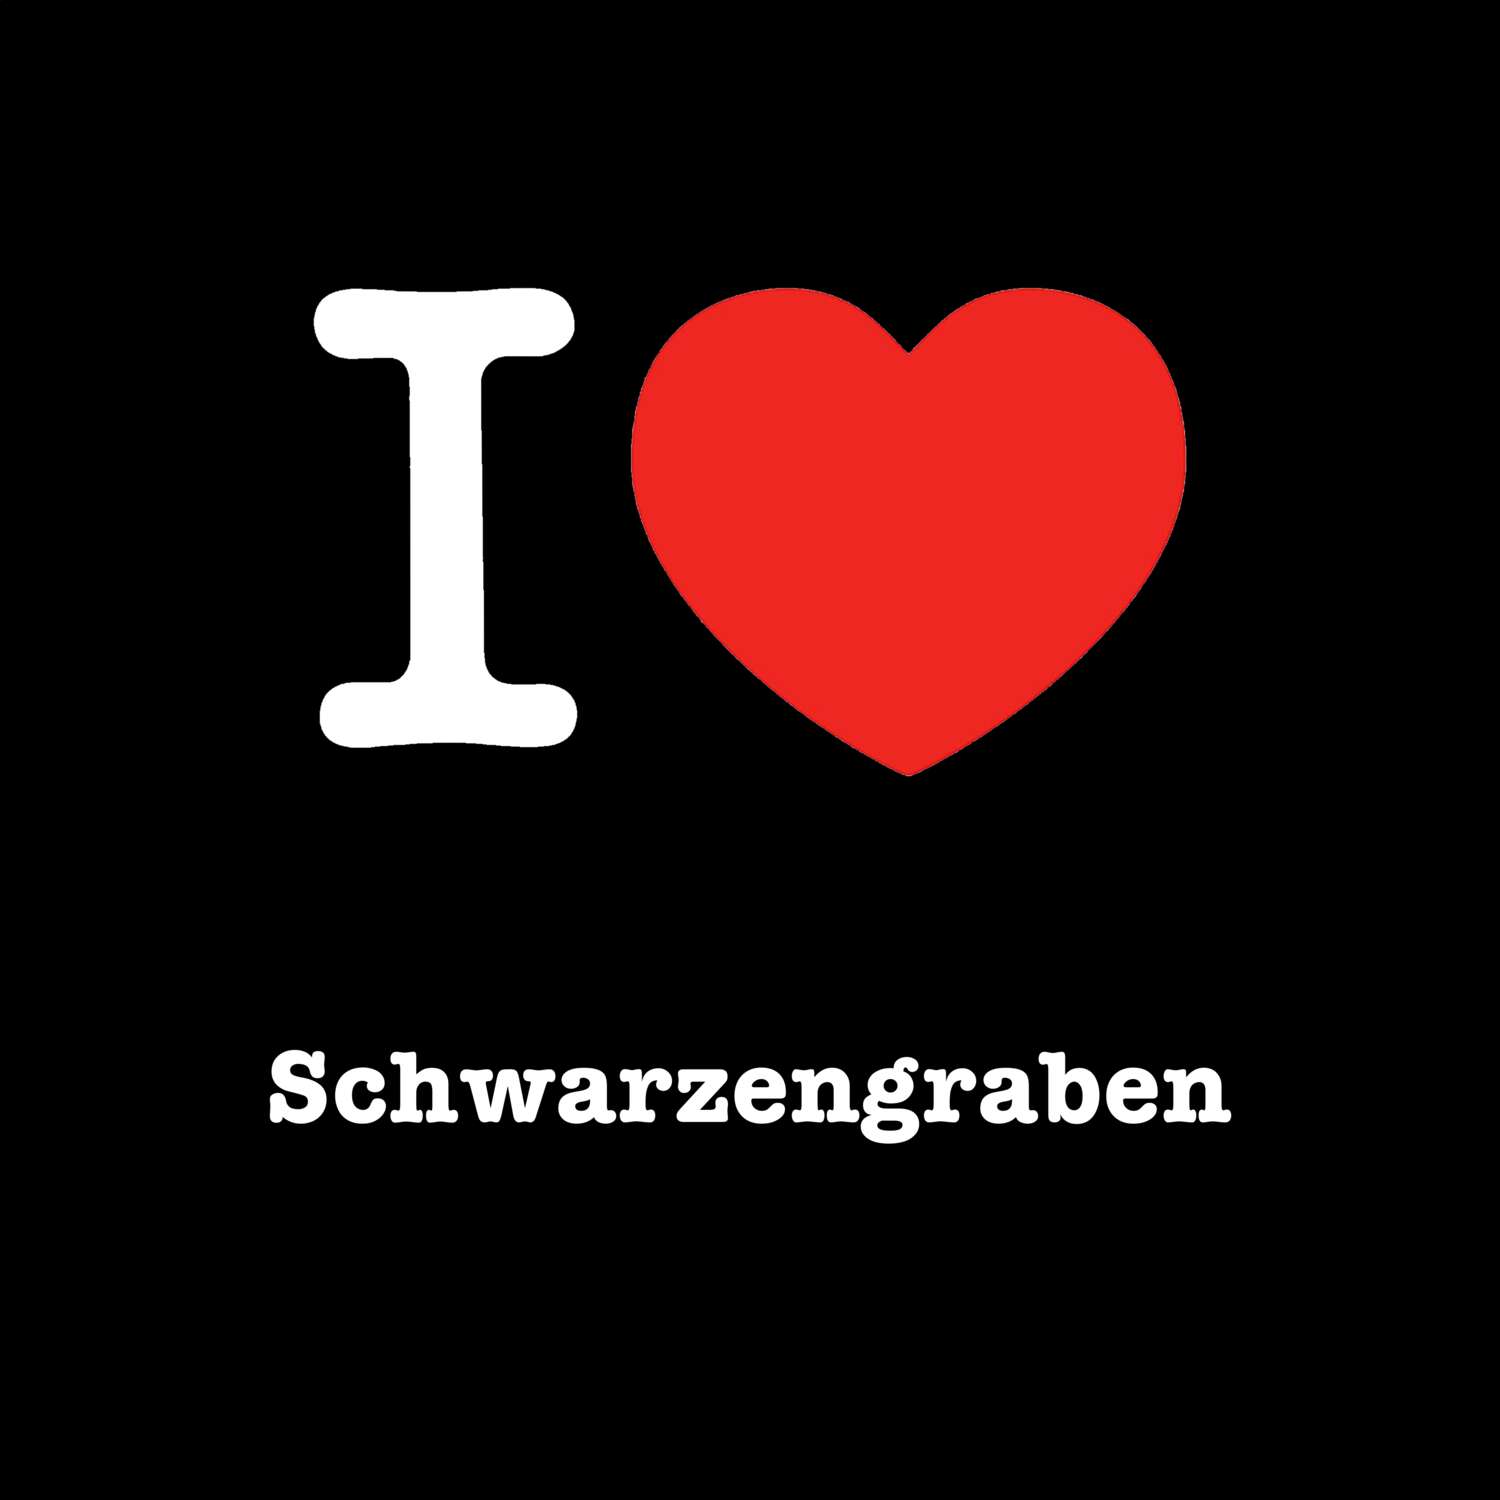 Schwarzengraben T-Shirt »I love«